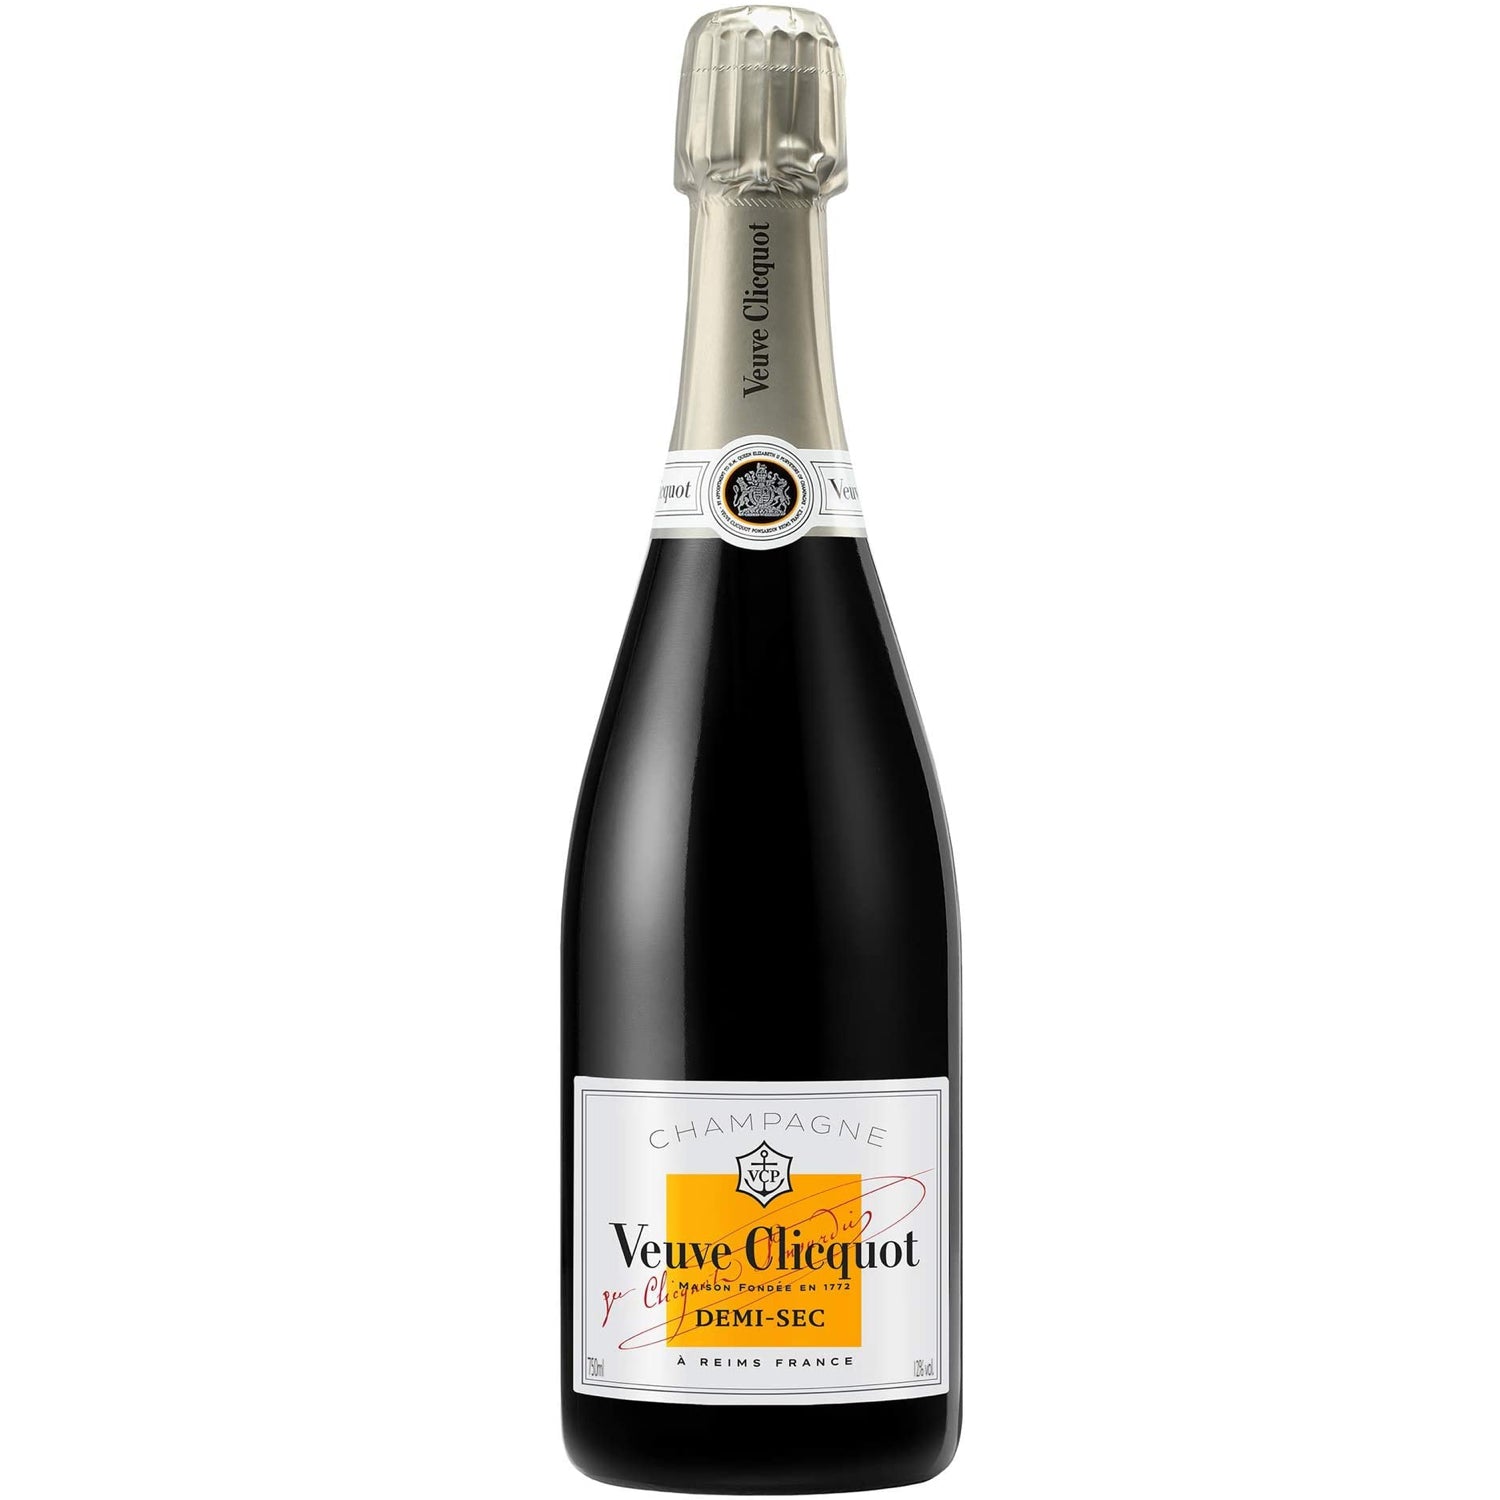 Champagne Veuve Clicquot Demi-Sec [750ml]